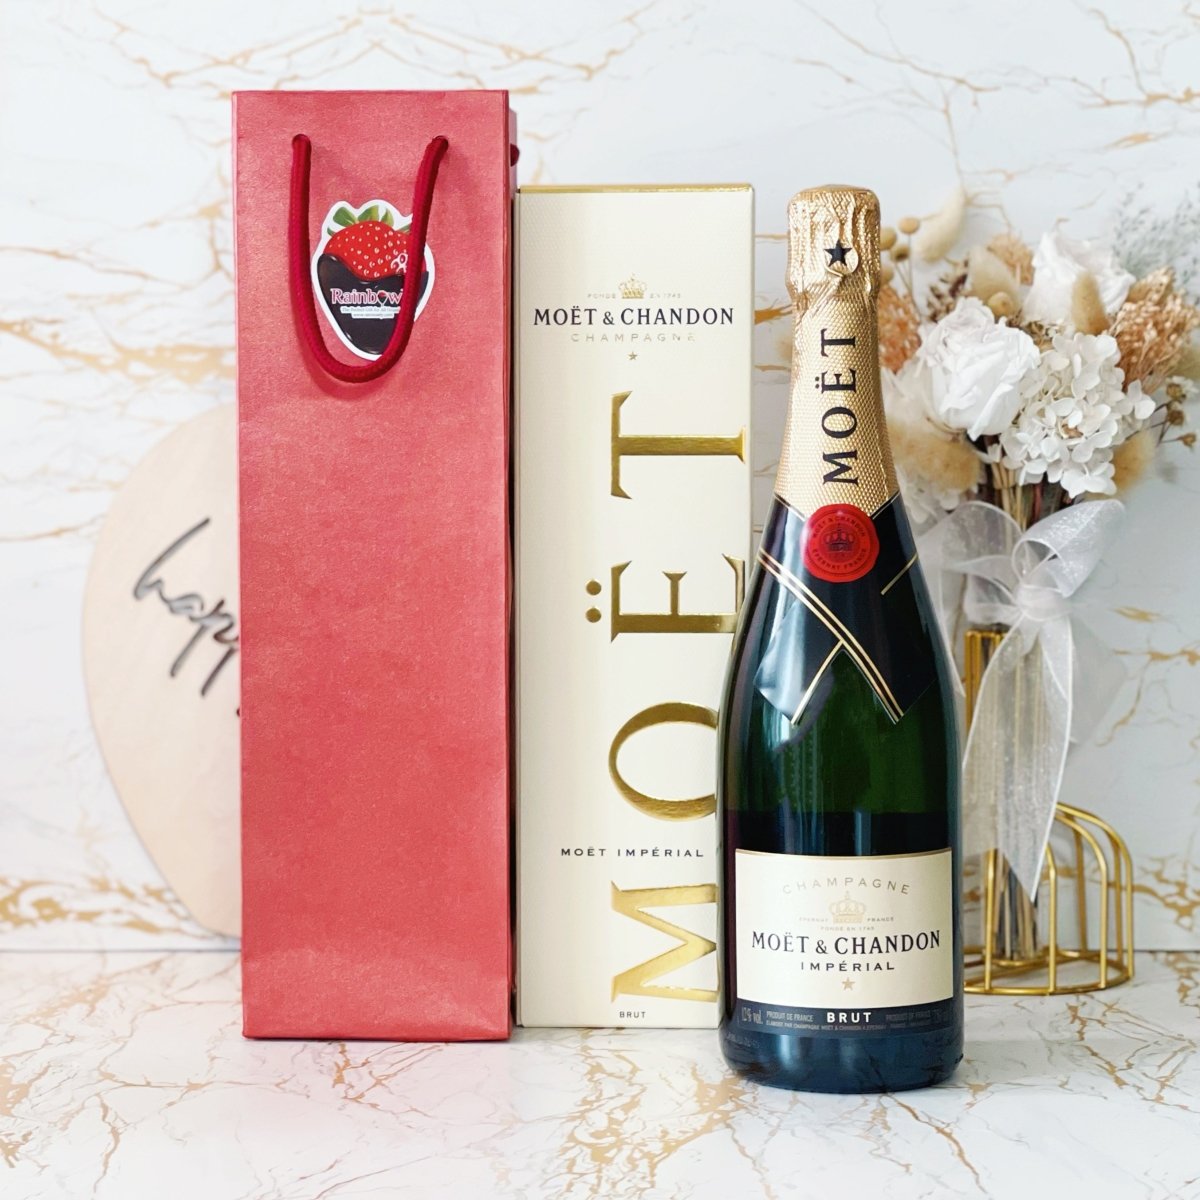 Moët et Chandon Brut Impérial Champagne - Single Bottle